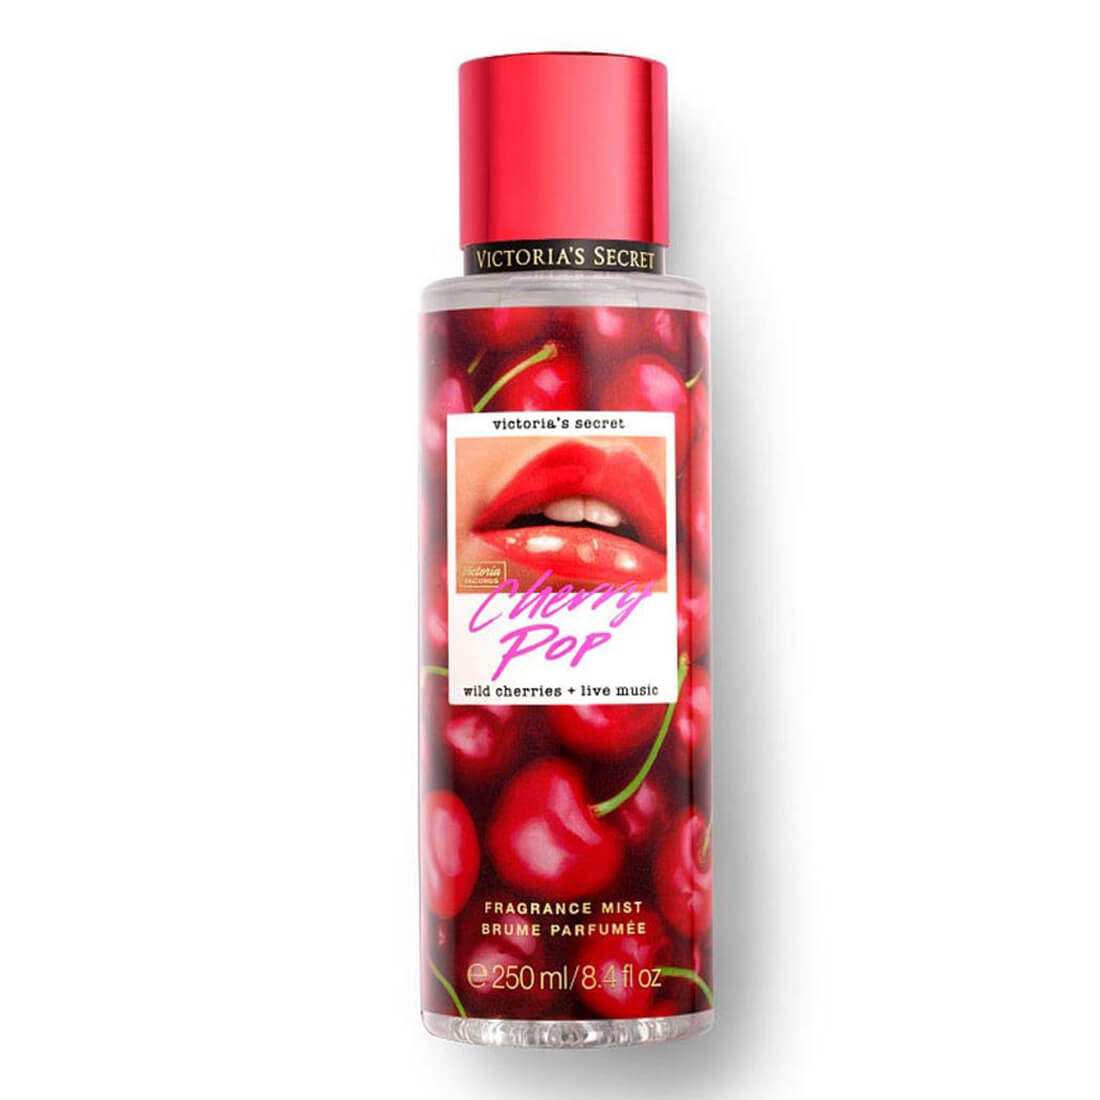 Victoria's Secret Cherry Pop Fragrance Mist 250ml